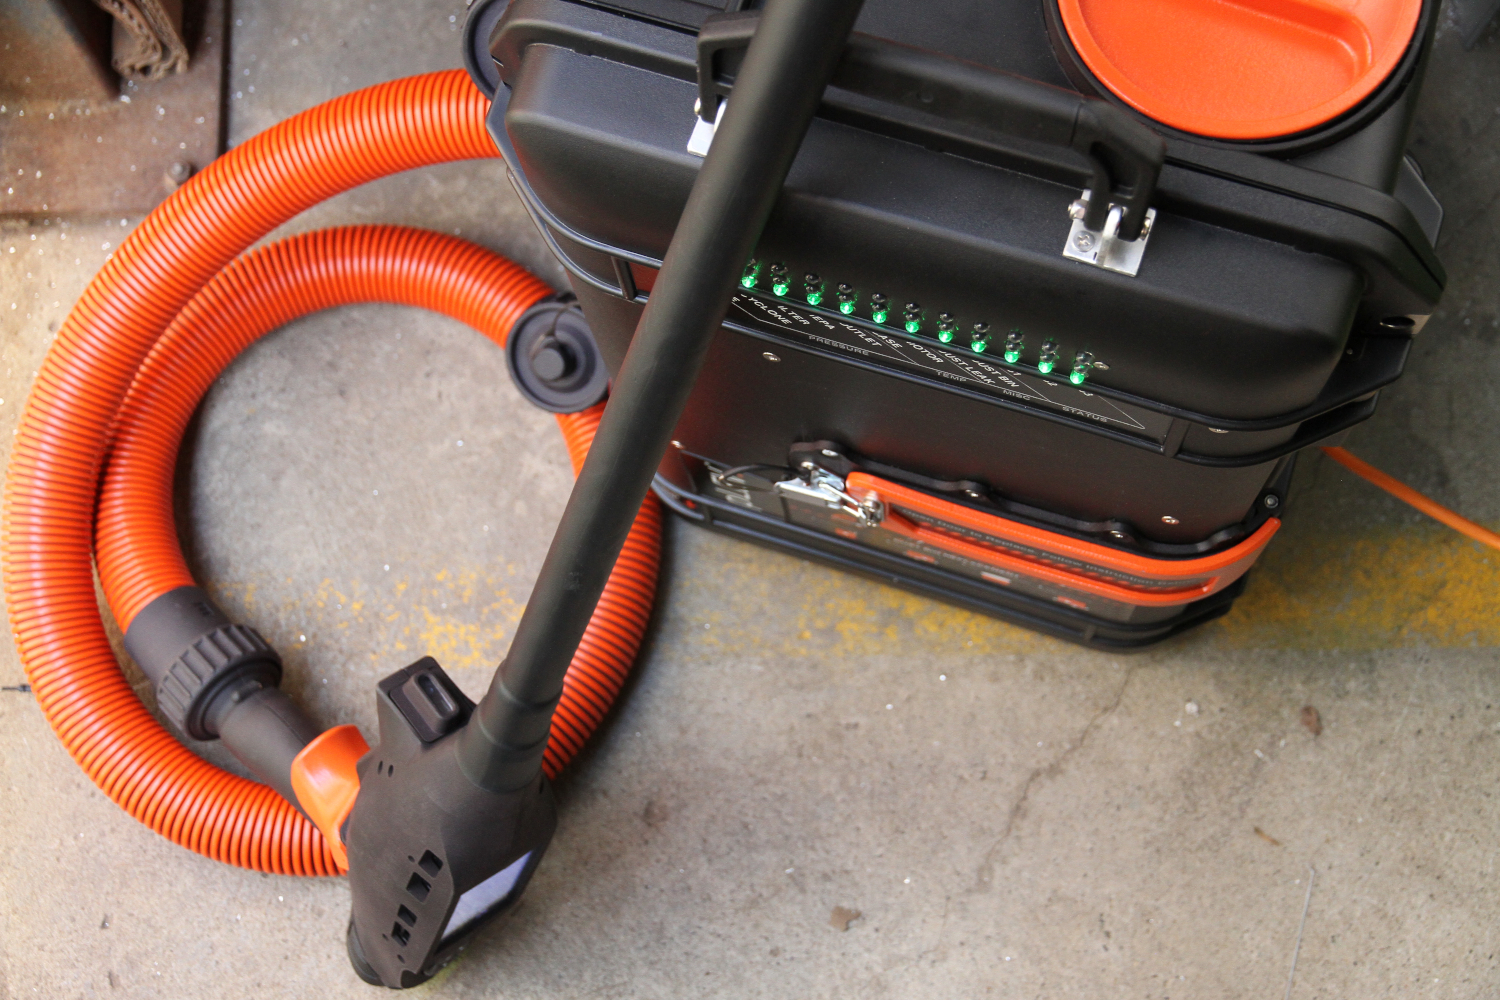 SmartLance EX connected to Extractor via orange hose